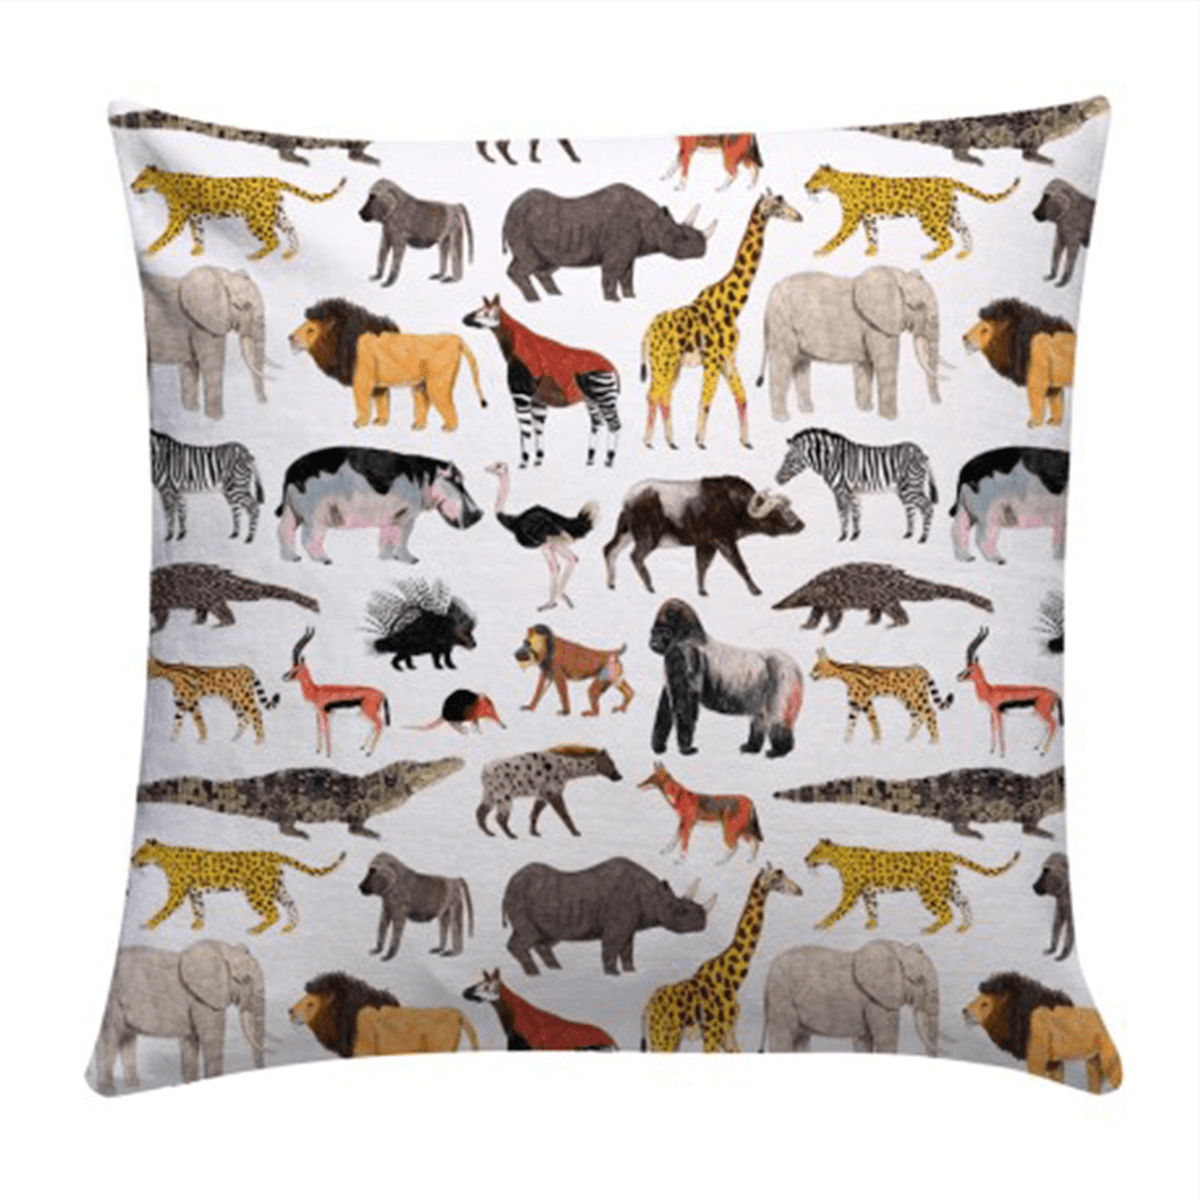 African animals cushion